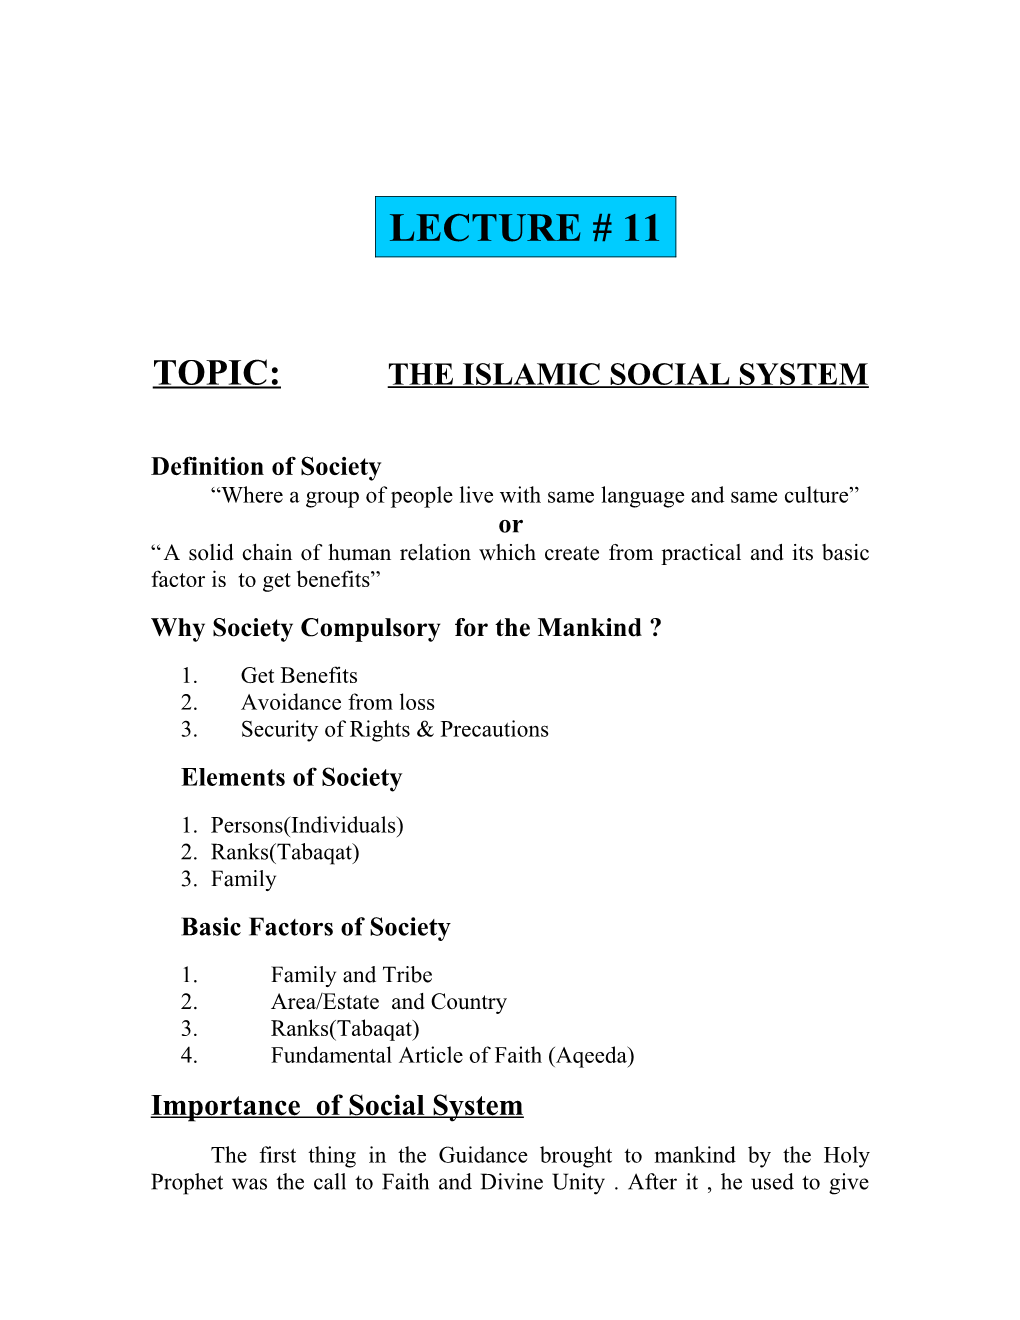 The Islamic Social Sistem